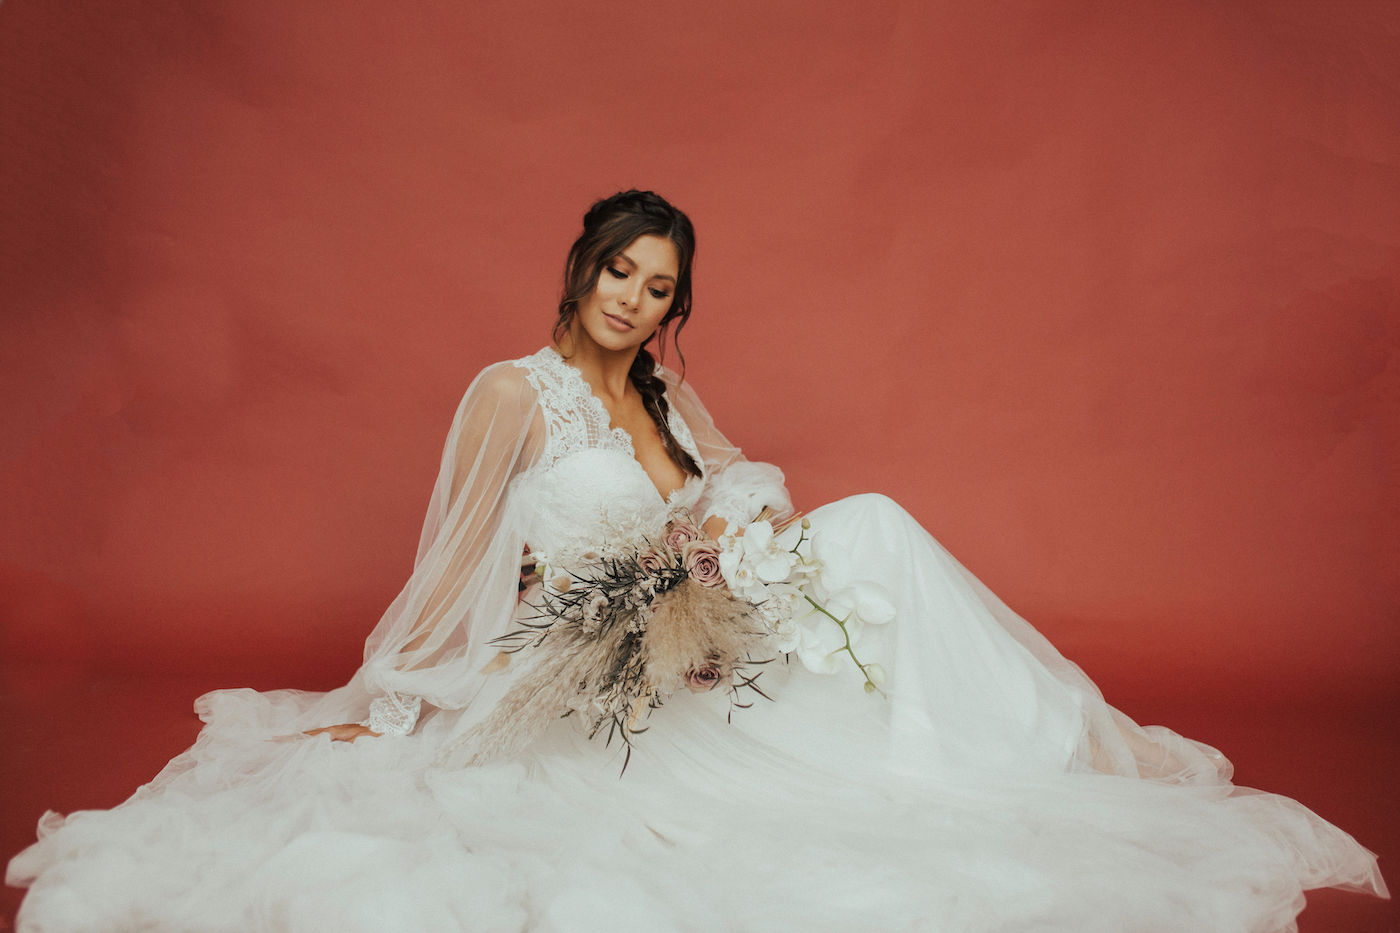 Custom Made Wedding Dress  Bridal Gown in Kentucky – D&D Clothing